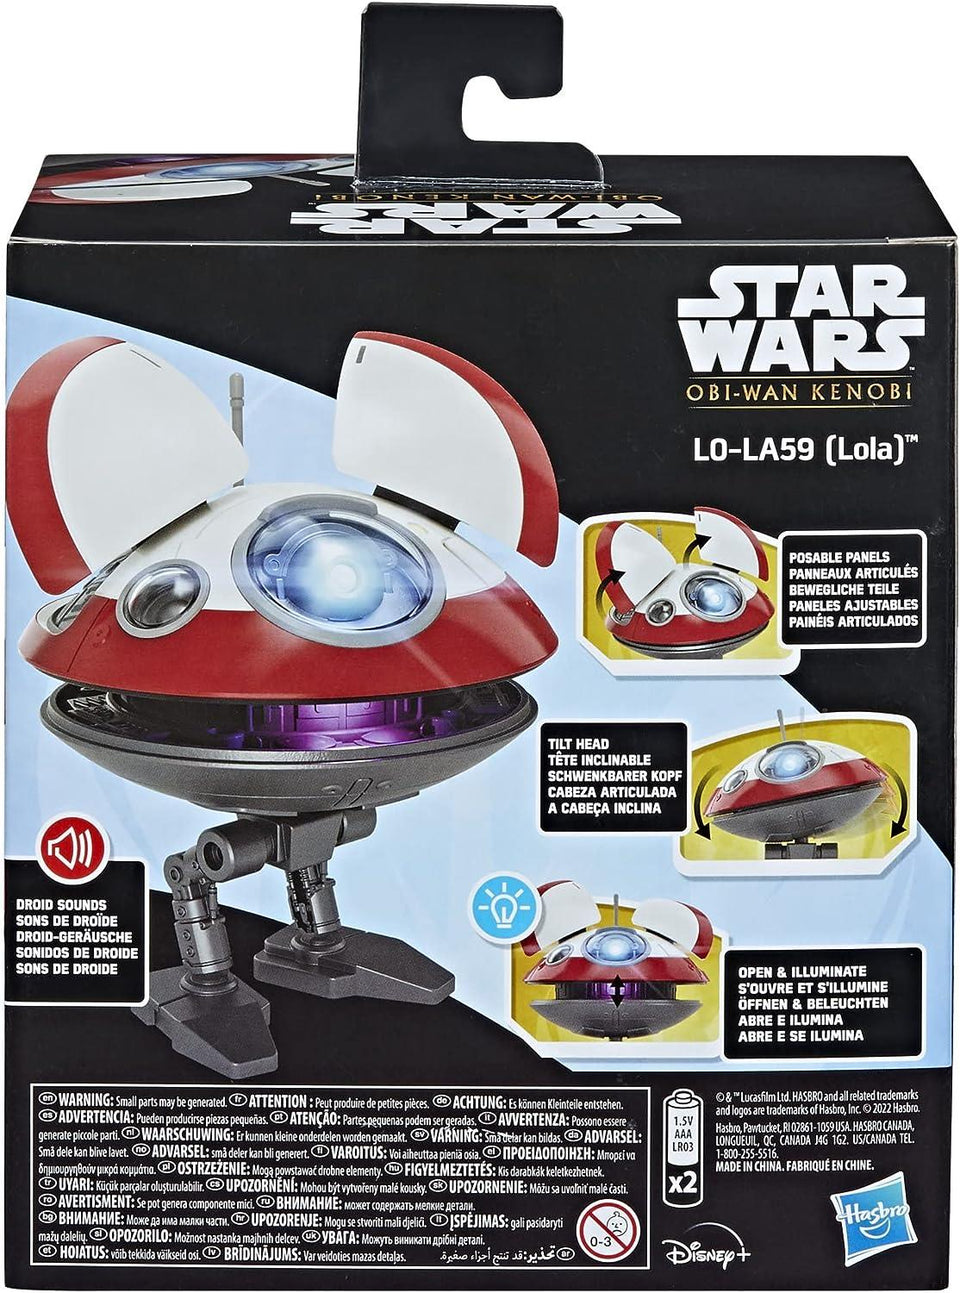 Star Wars L0-LA59 Lola Droid Electronic Figure Obi-Wan Kenobi Toy Disney Hasbro